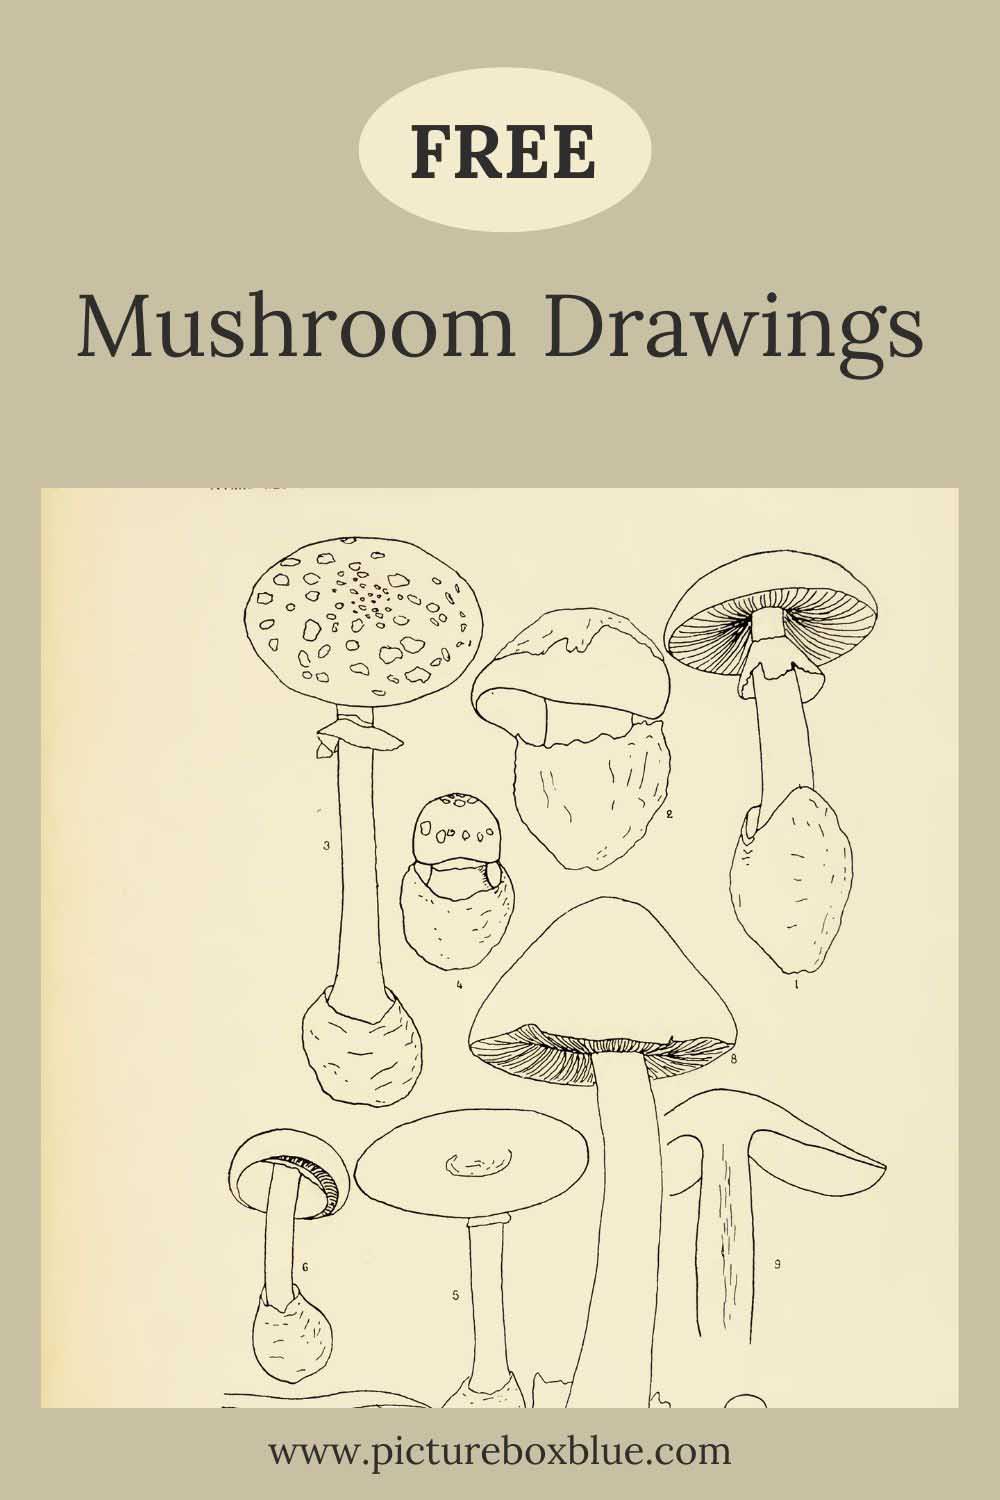 Free mushroom drawings